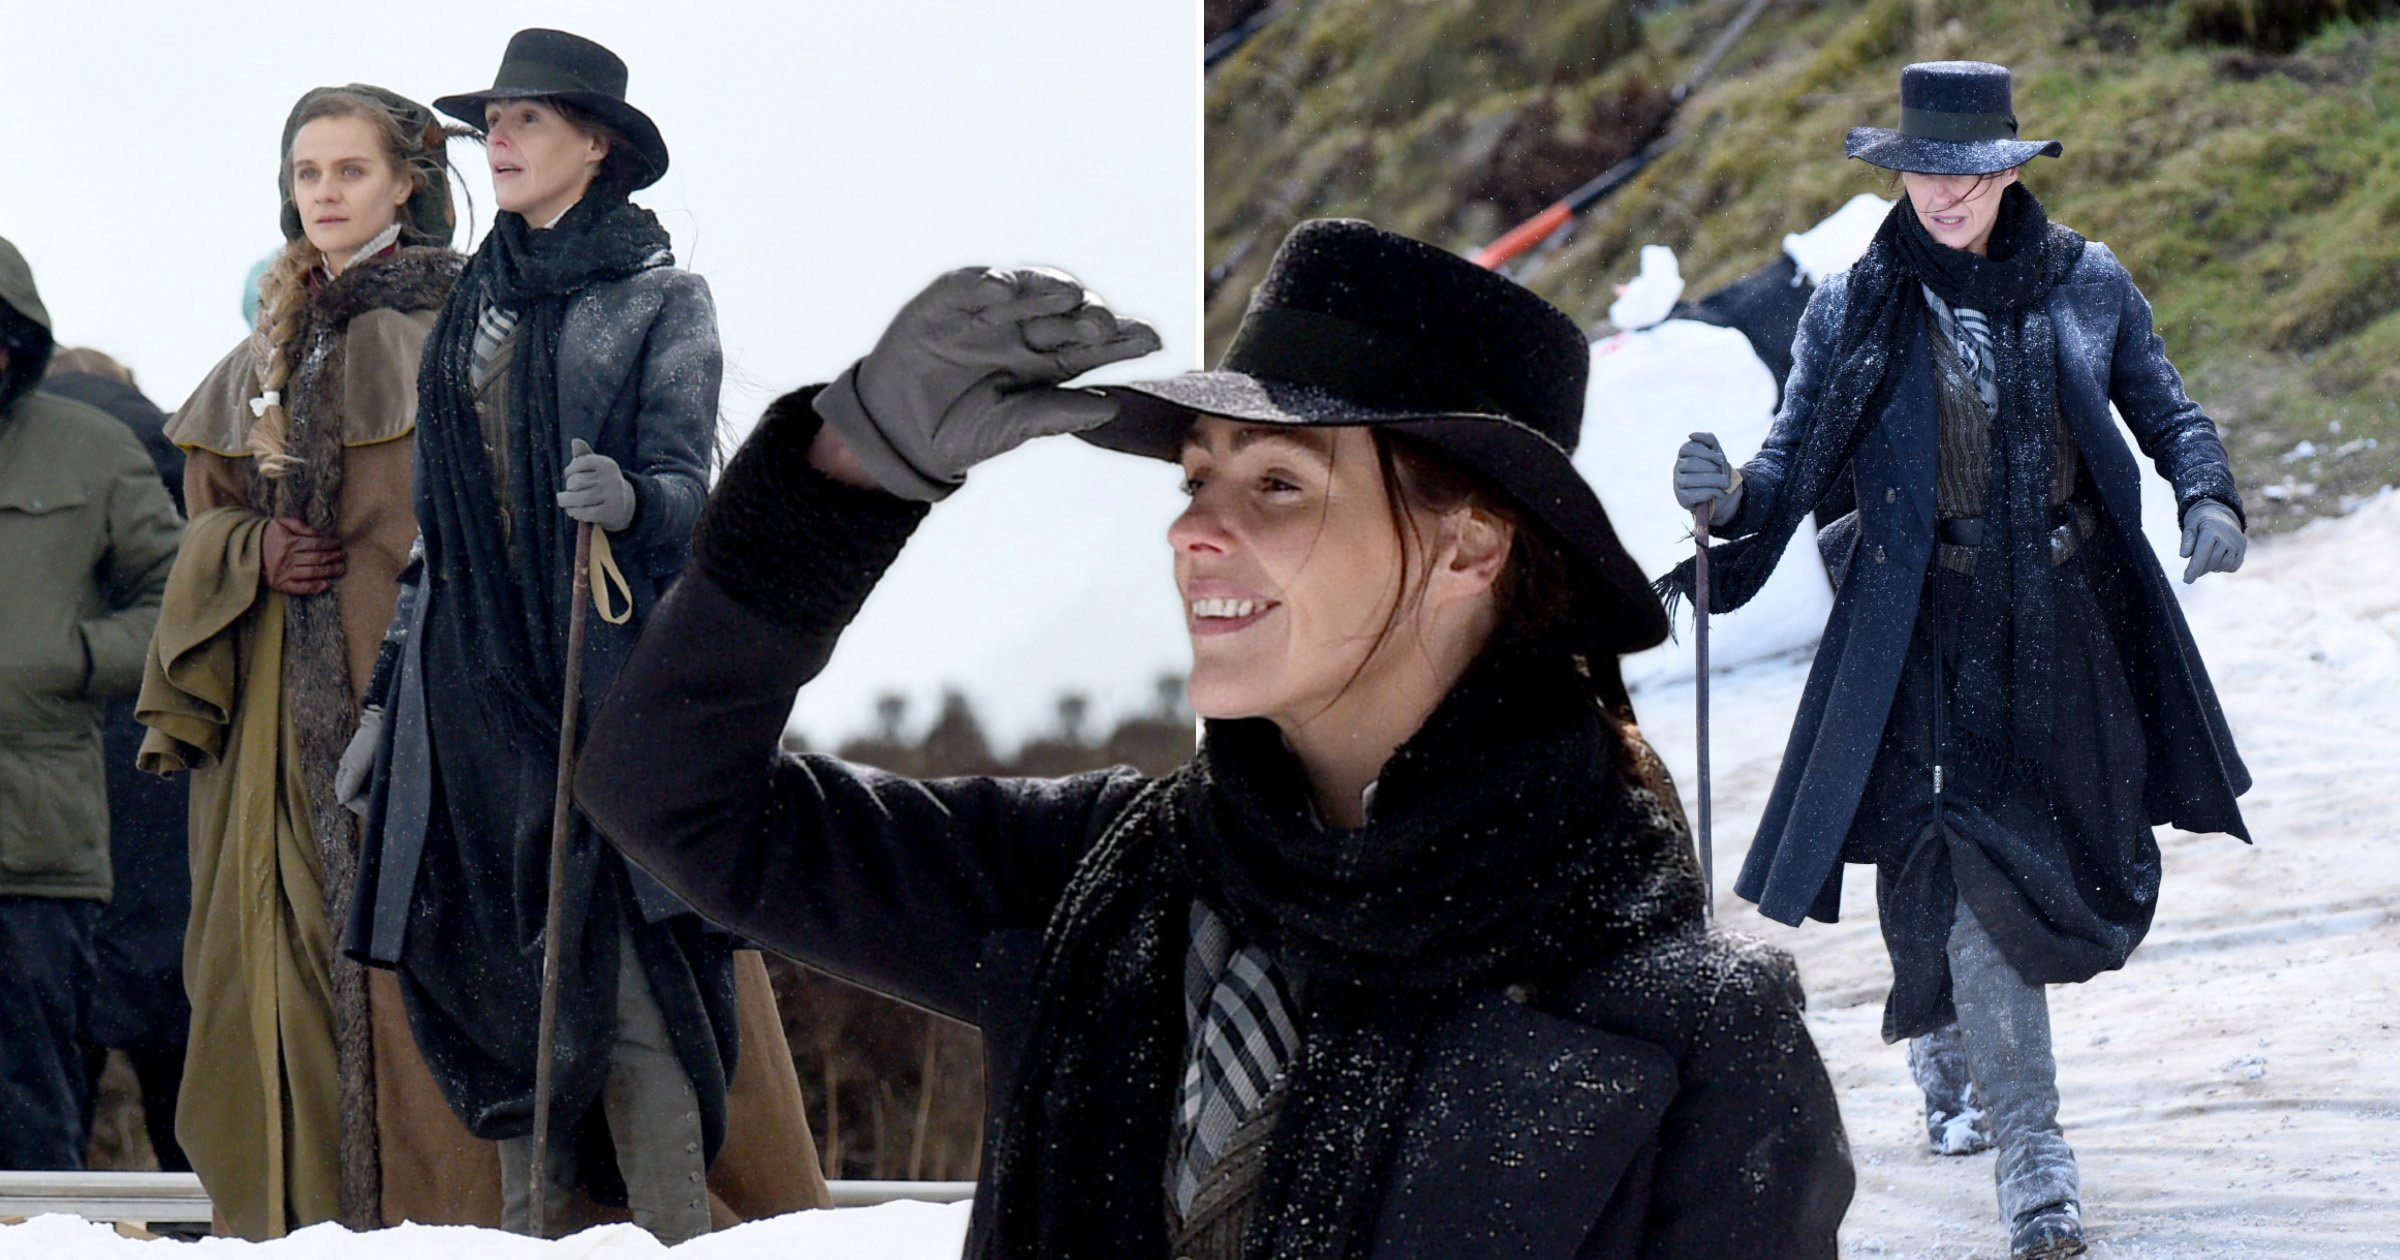 Suranne Jones films Gentleman Jack in the snow as series 2 steps up production